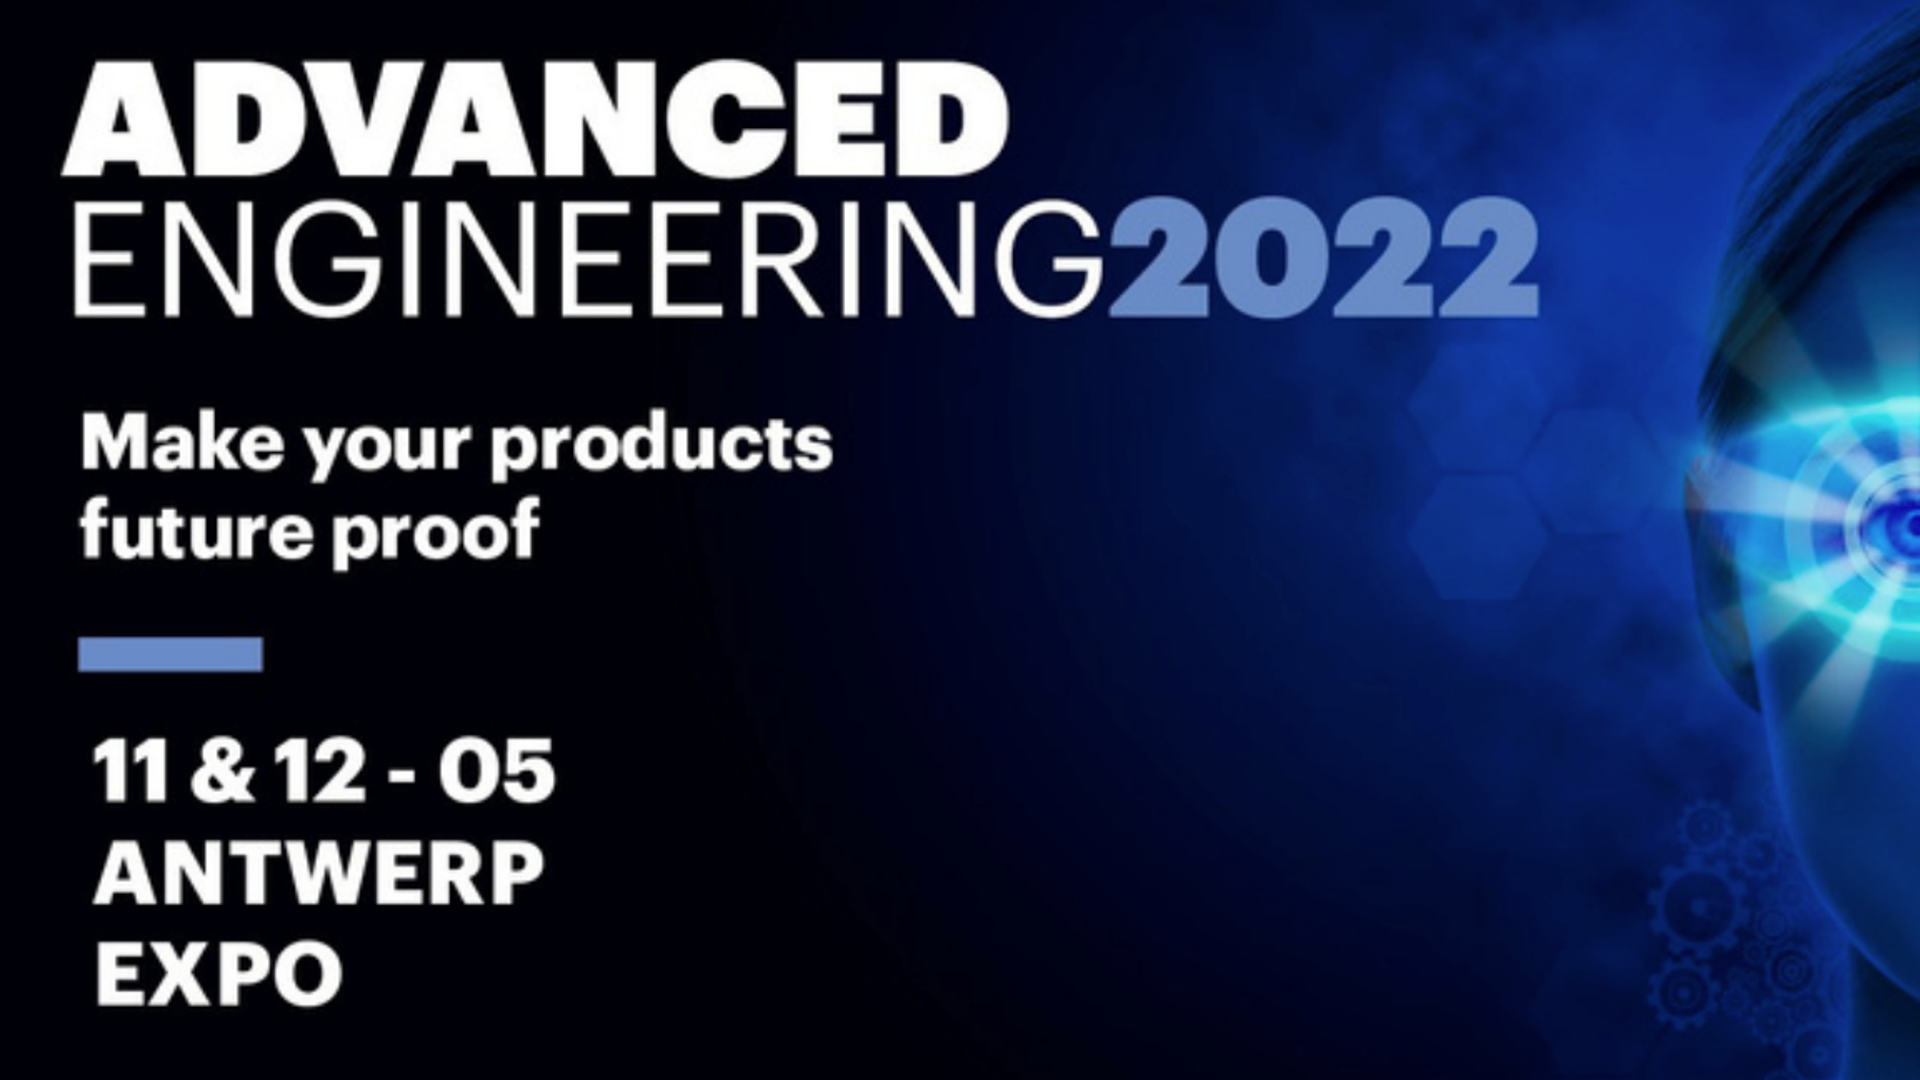 Advanced Engineering 2022